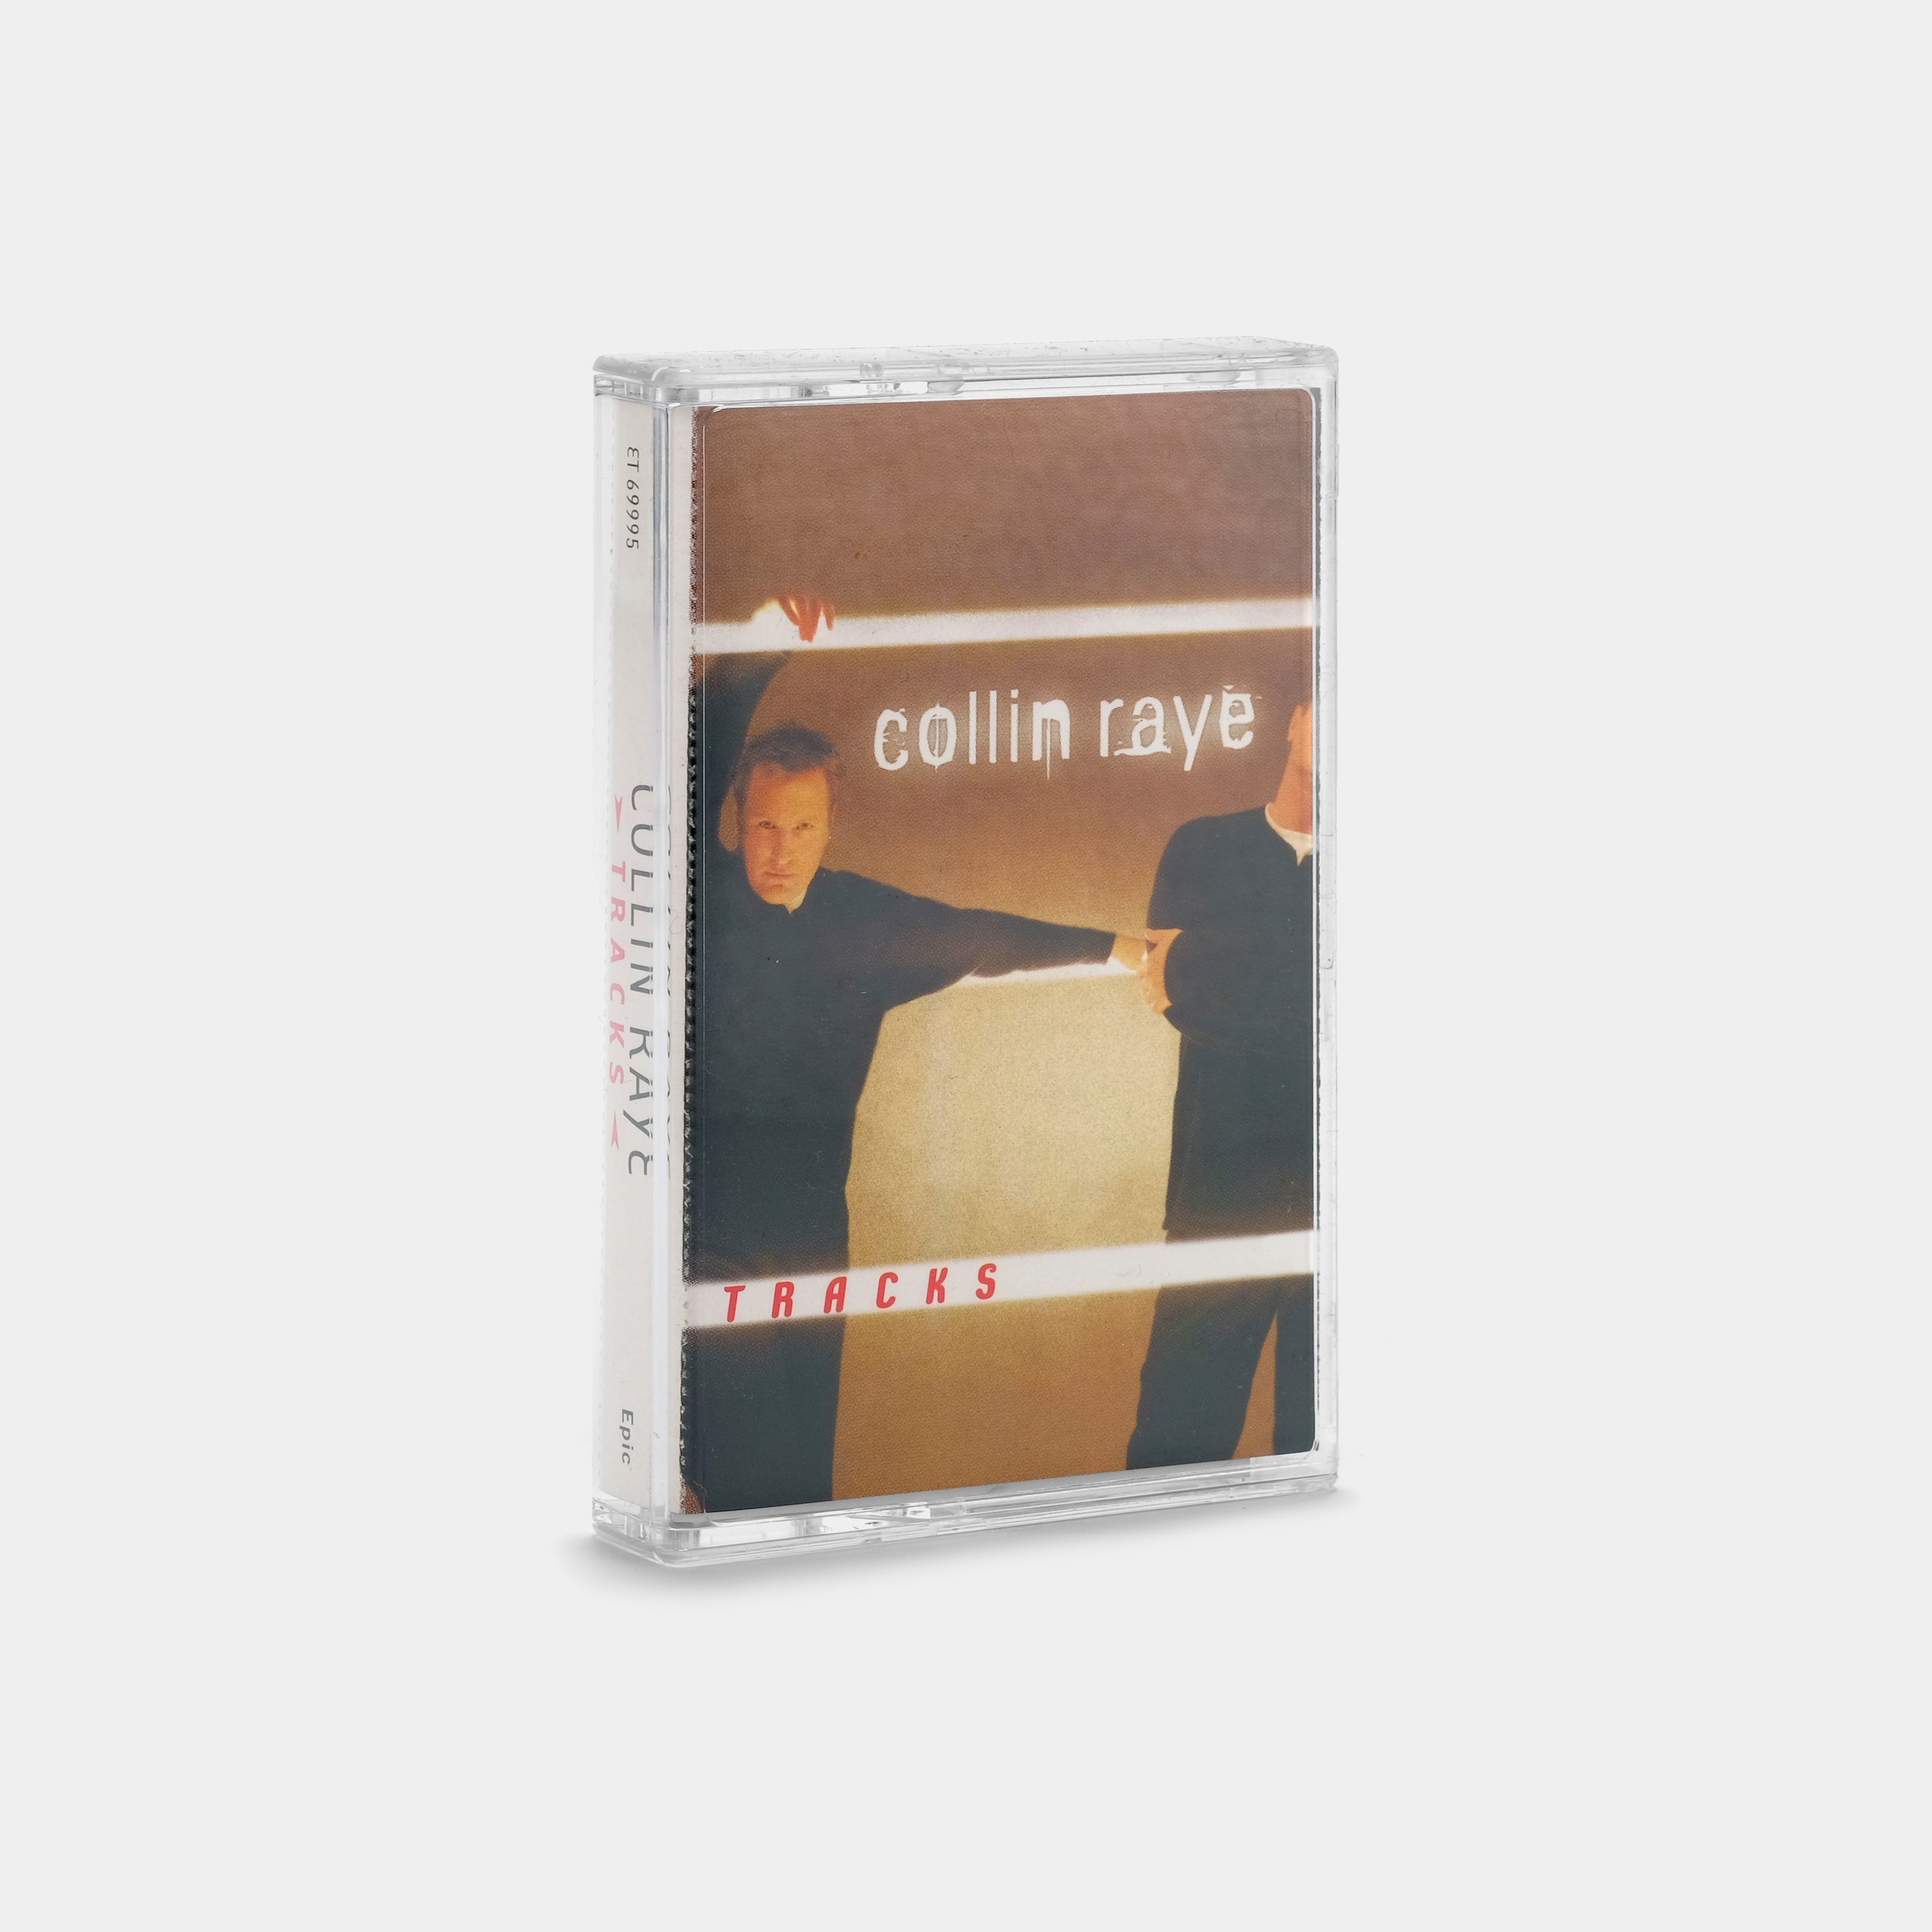 Collin Raye - Tracks Cassette Tape